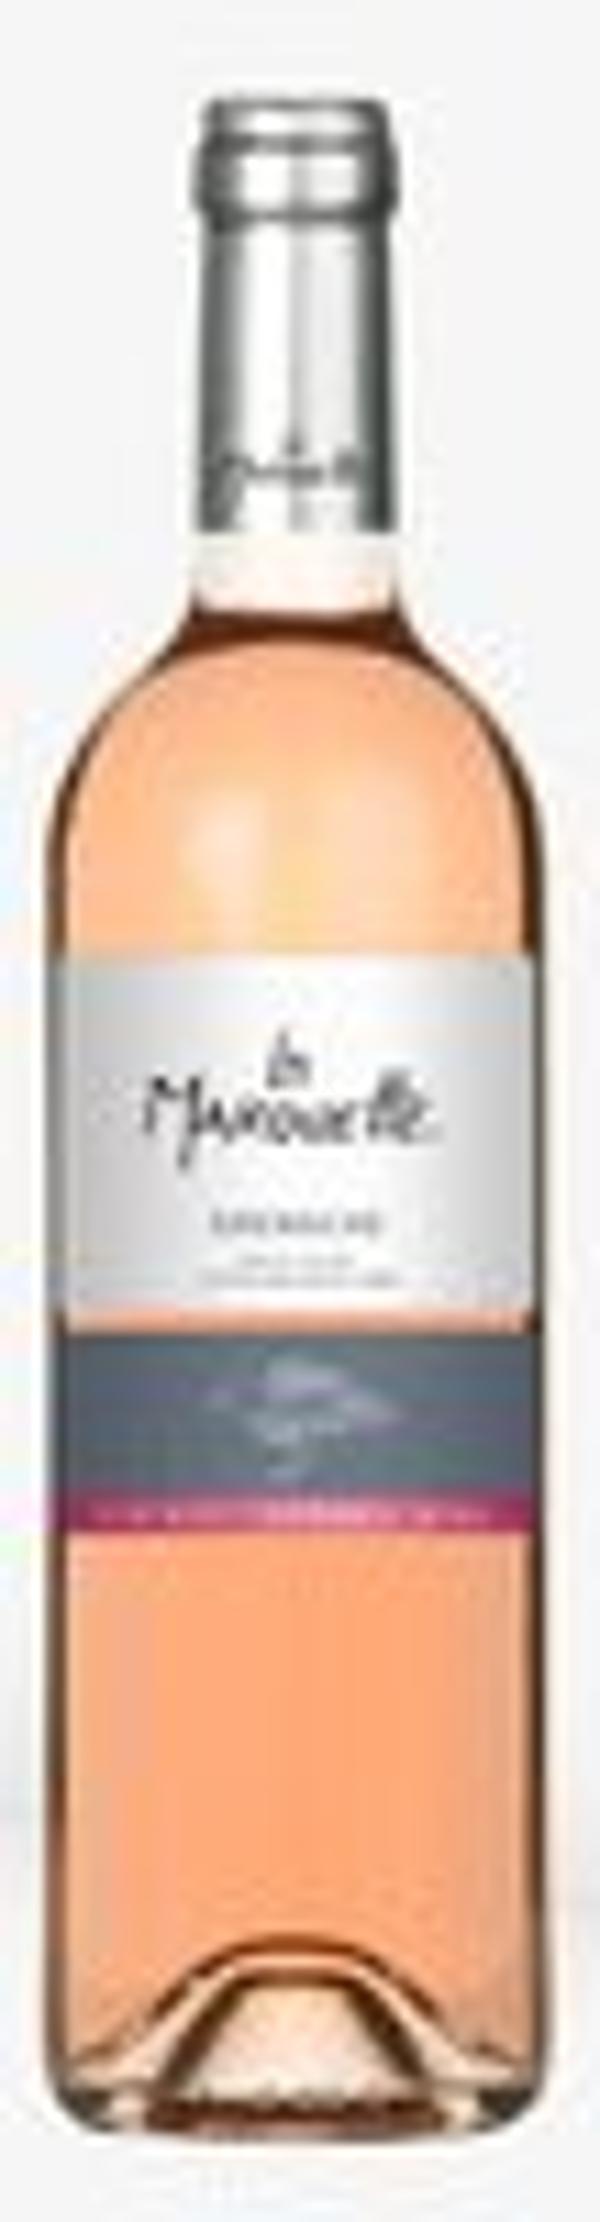 Produktfoto zu La Marouette Grenache Rosé Wein 0,75L